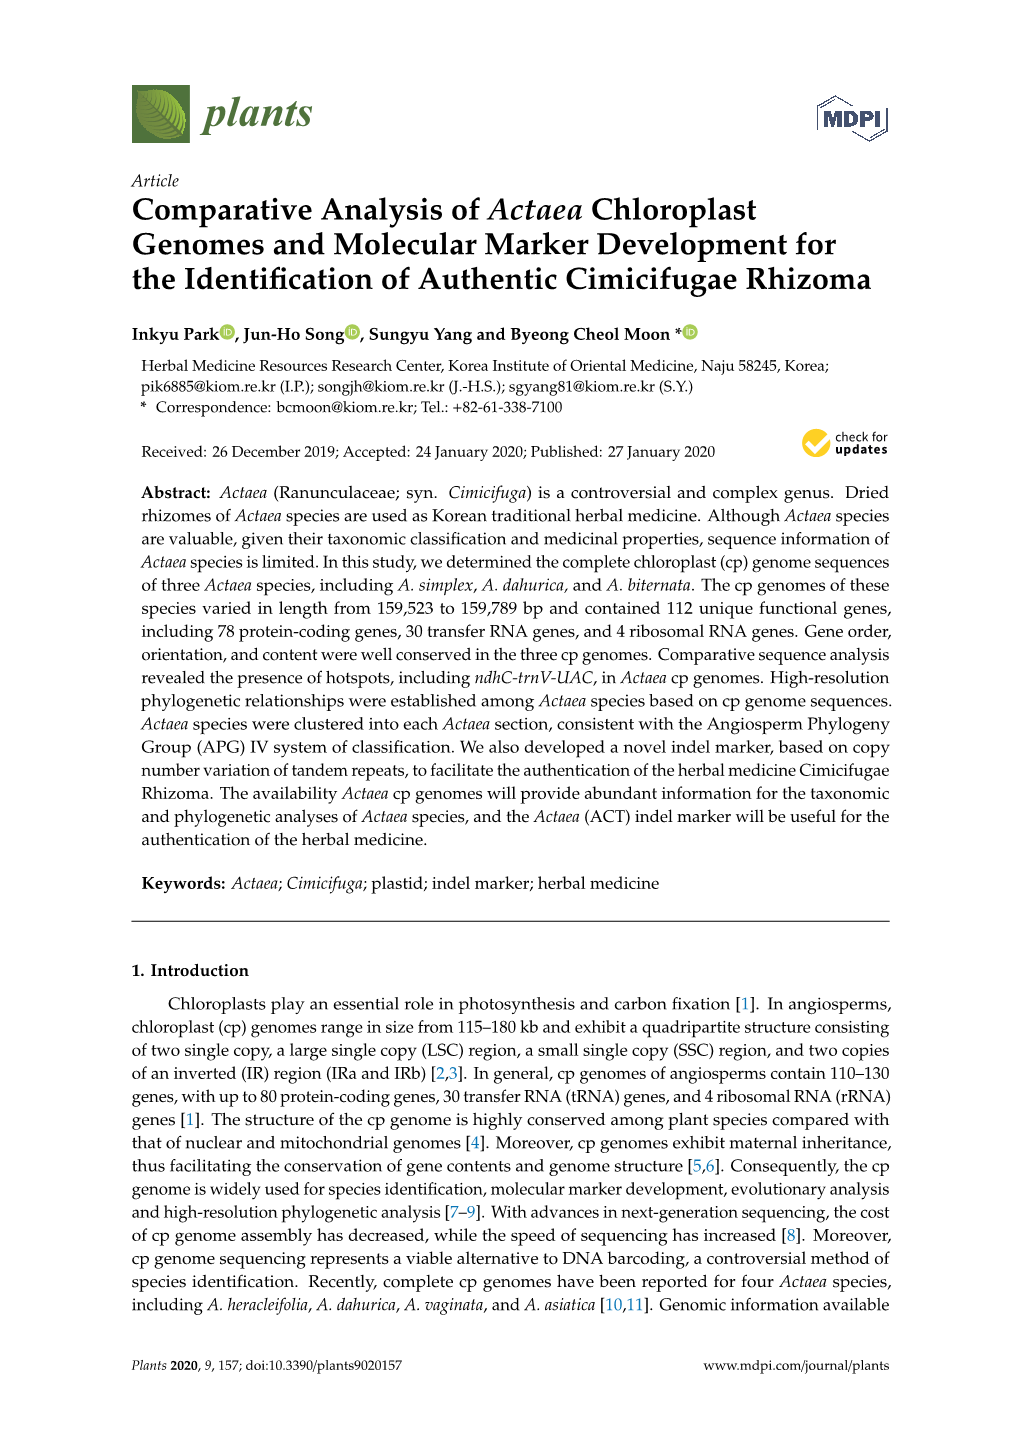 Comparative Analysis of Actaea Chloroplast Genomes and Molecular Marker Development for the Identification of Authentic Cimicifugae Rhizoma